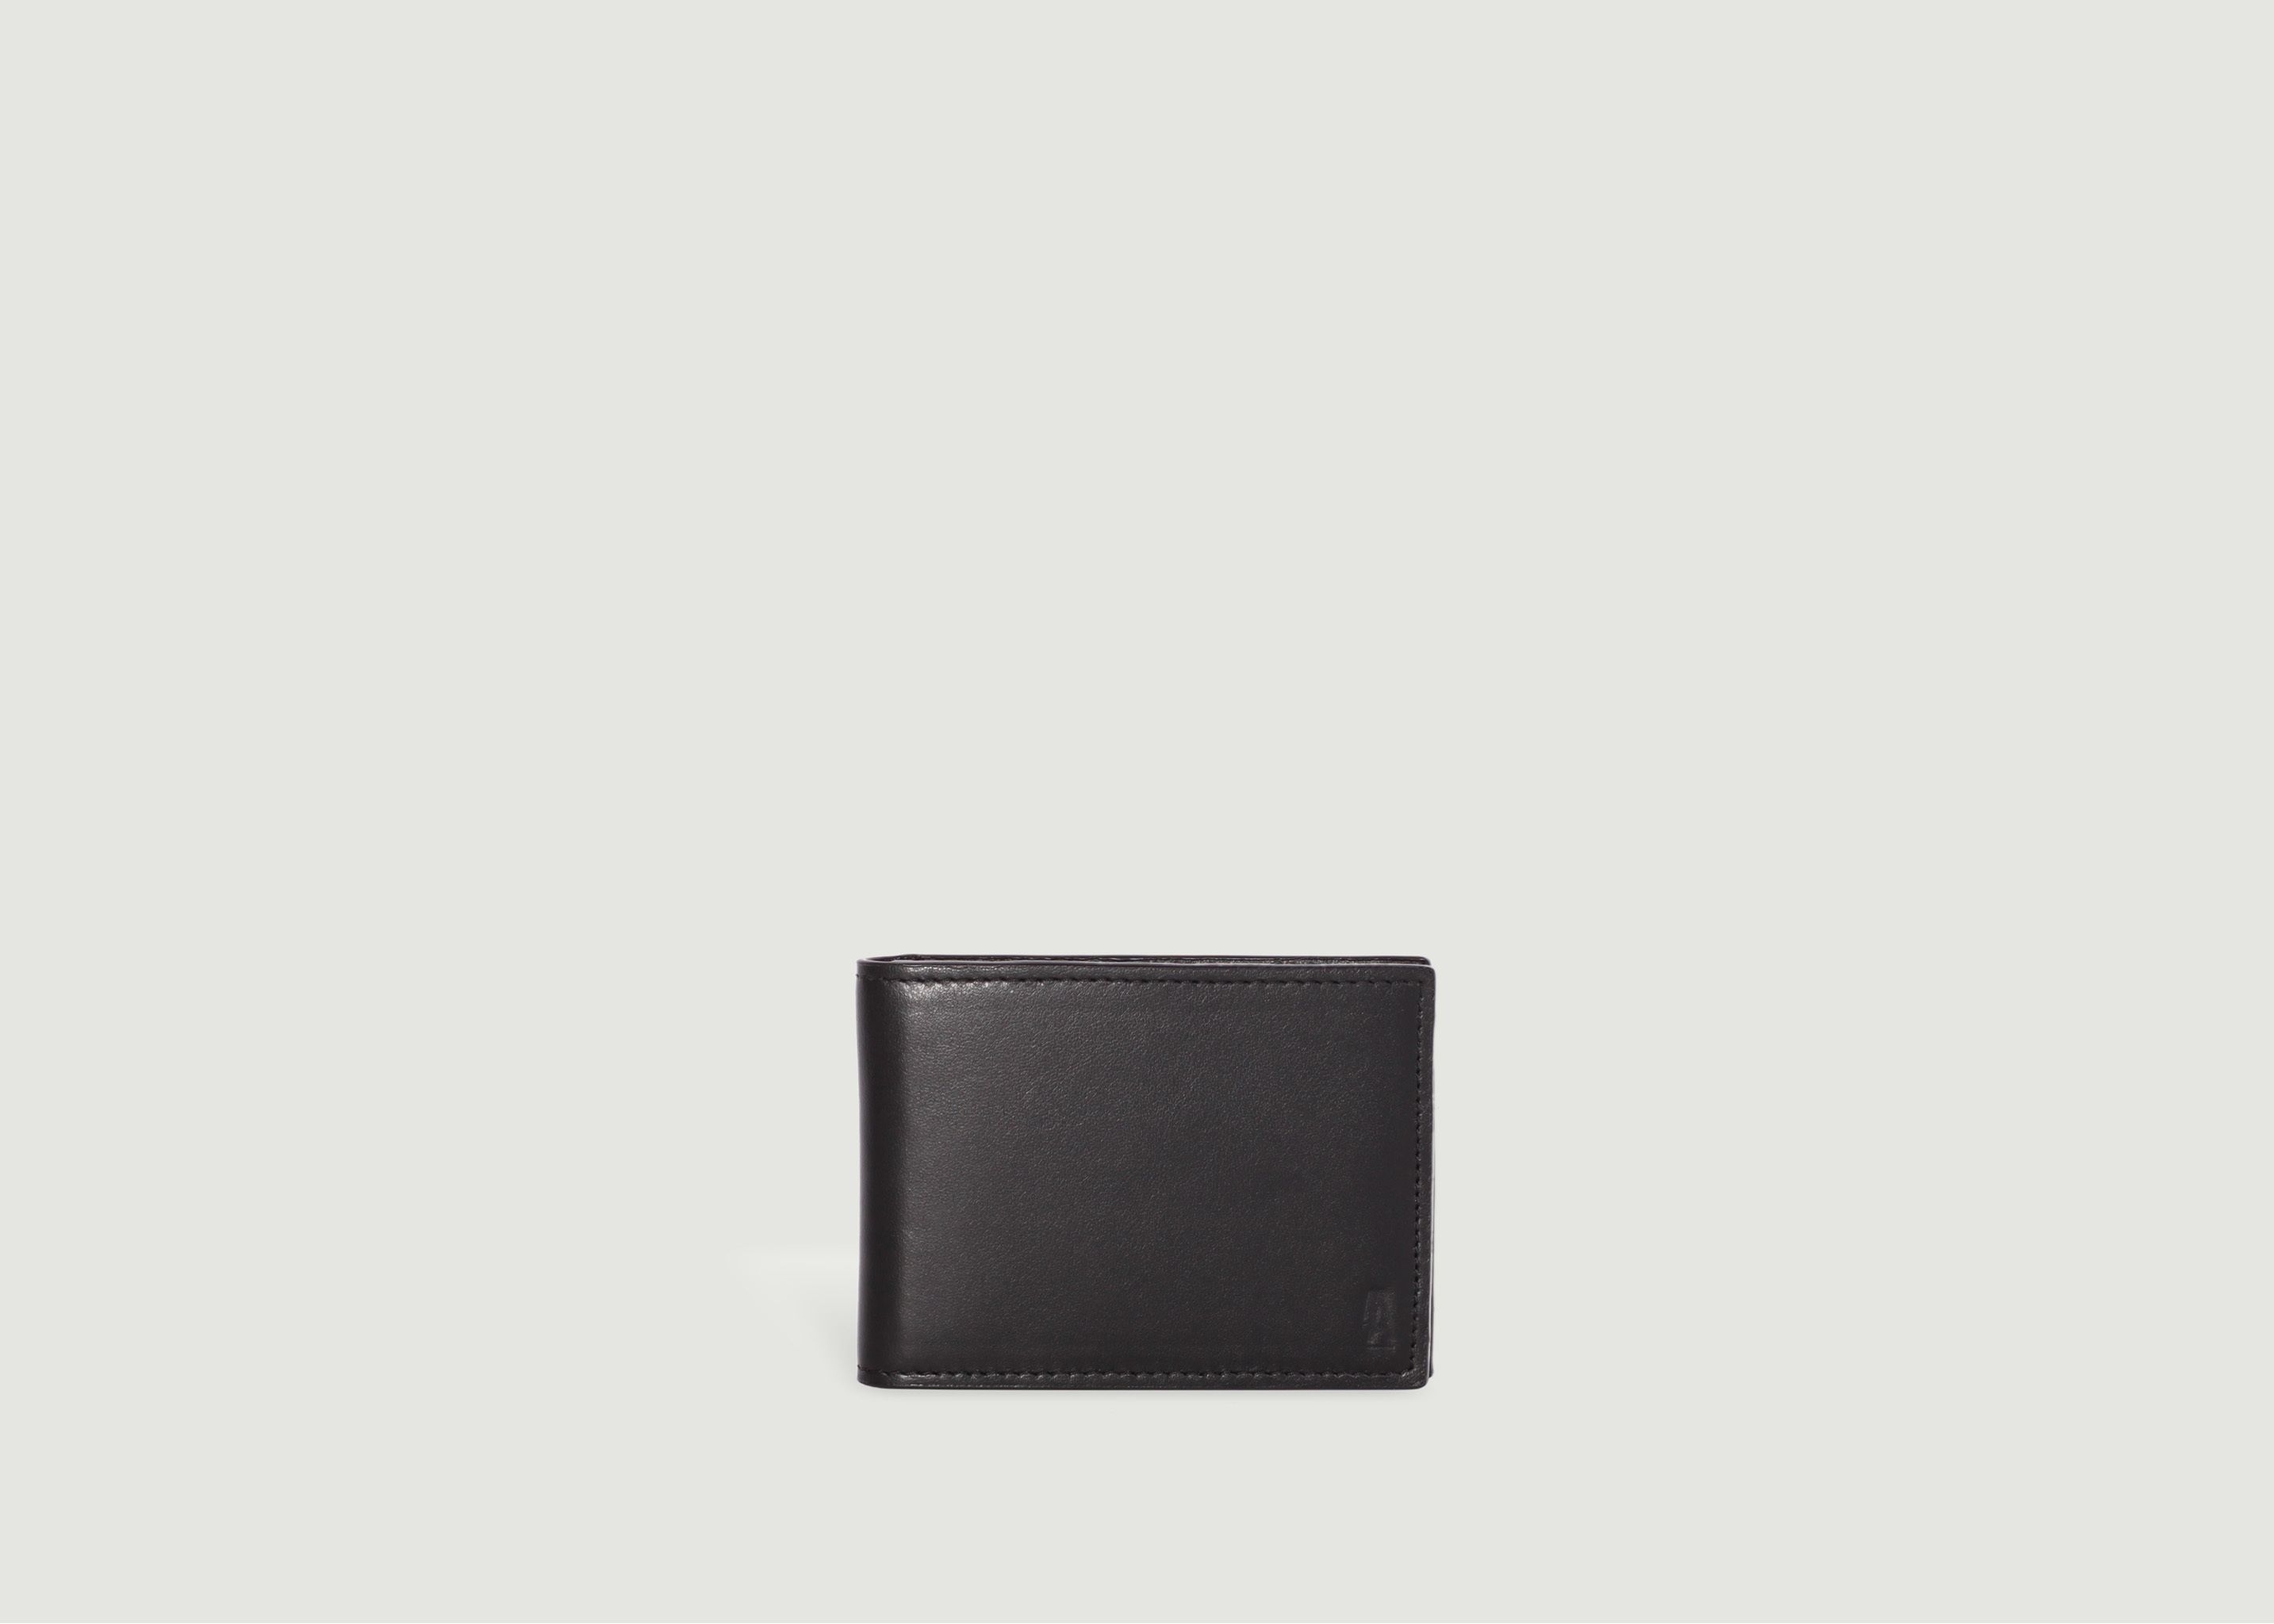 Cléry fine leather wallet - Ateliers Auguste